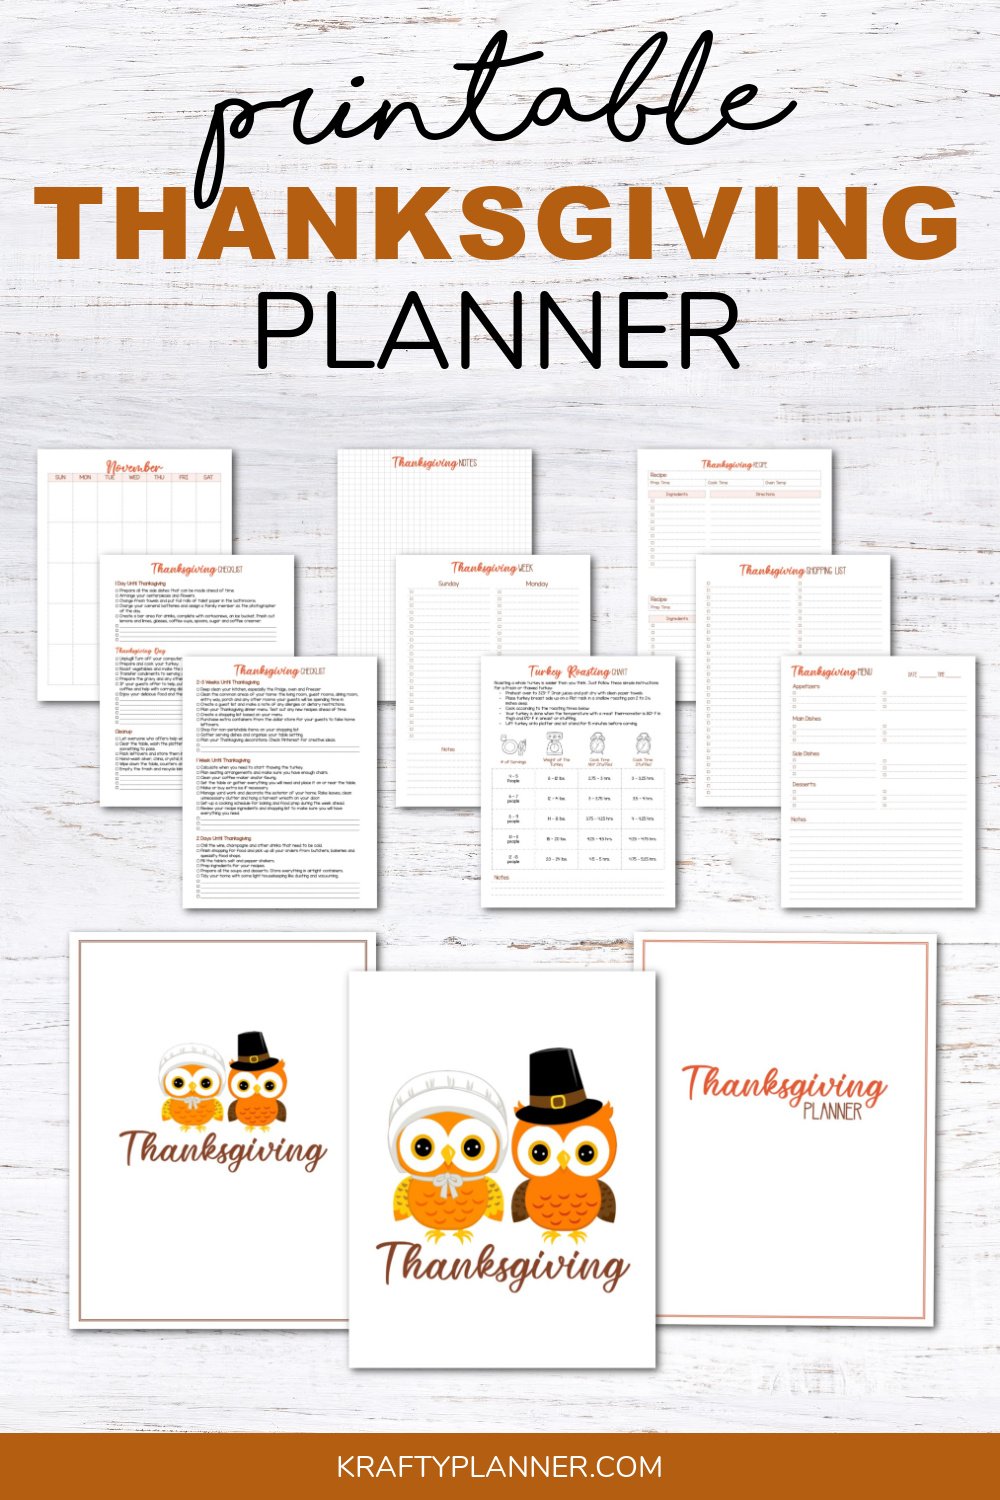 The Krafty Planner Thanksgiving Planner